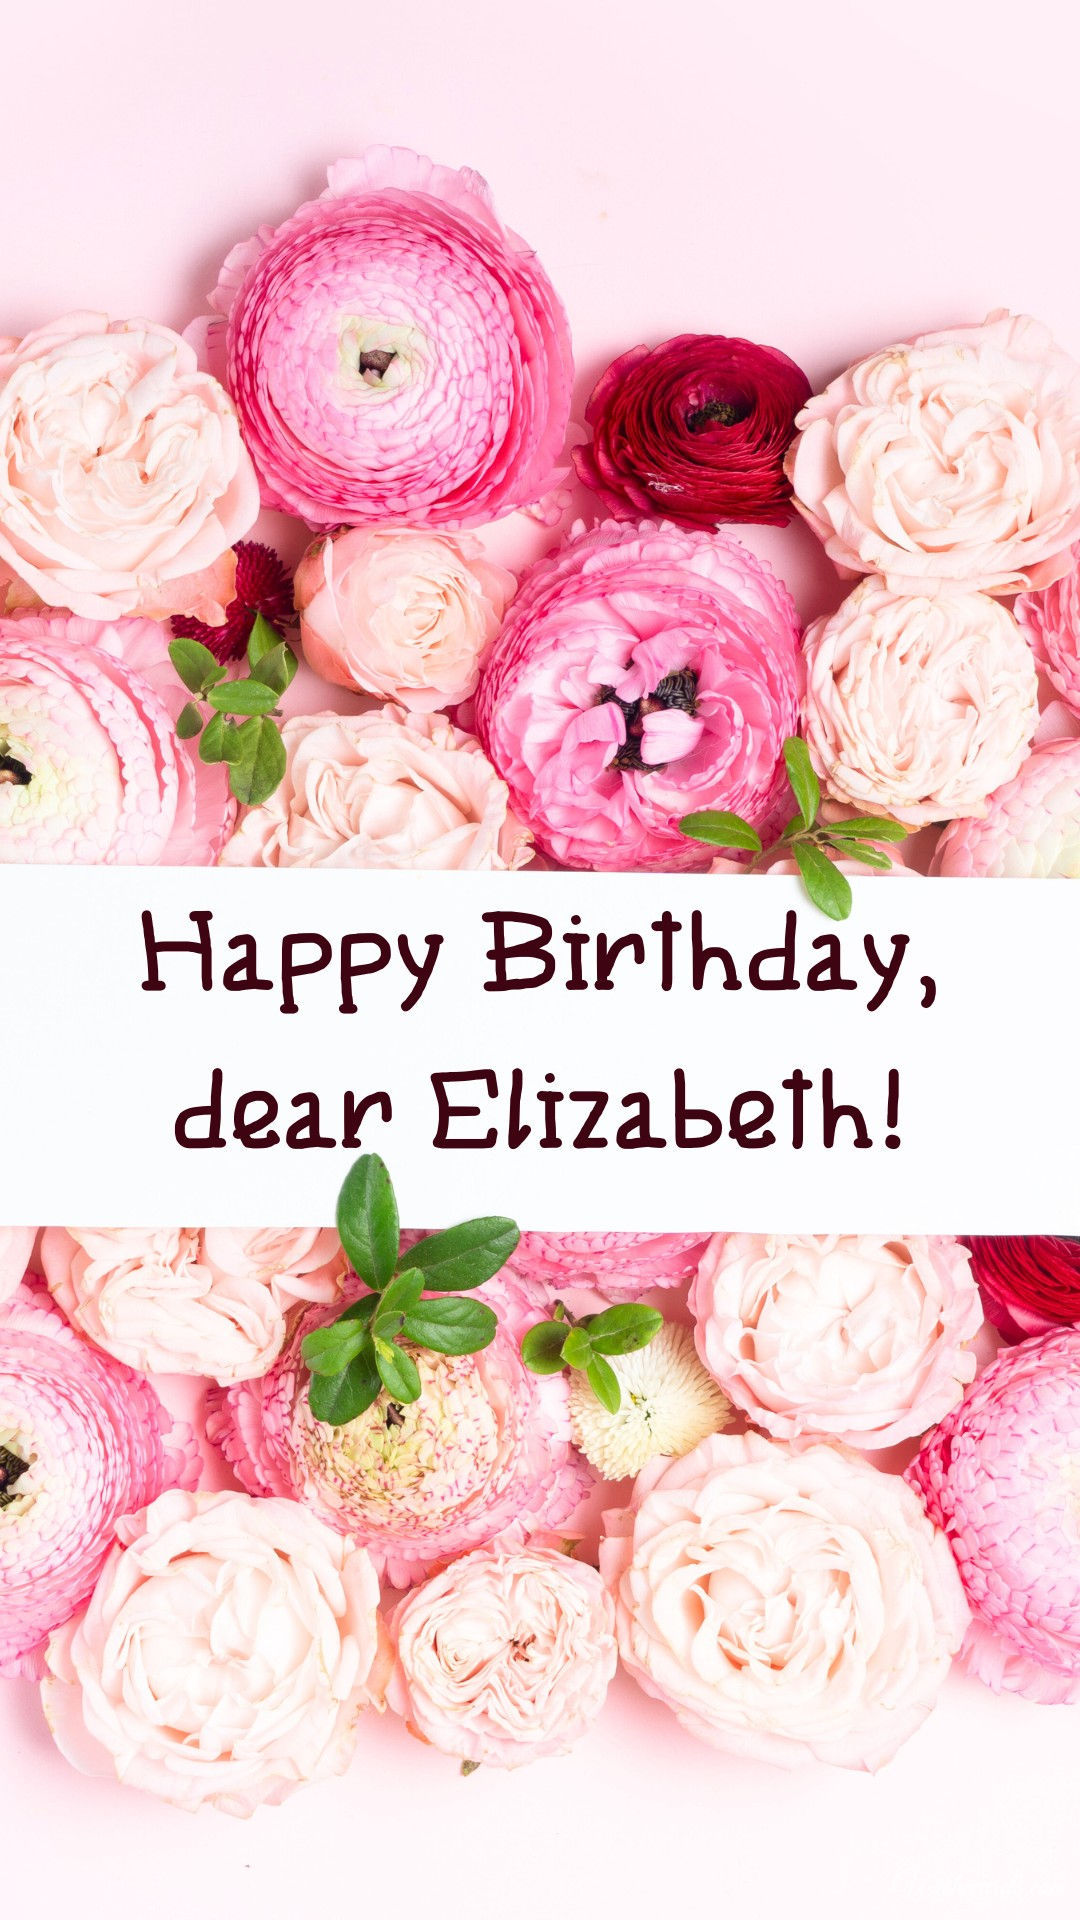 Happy Birthday Elizabeth Image